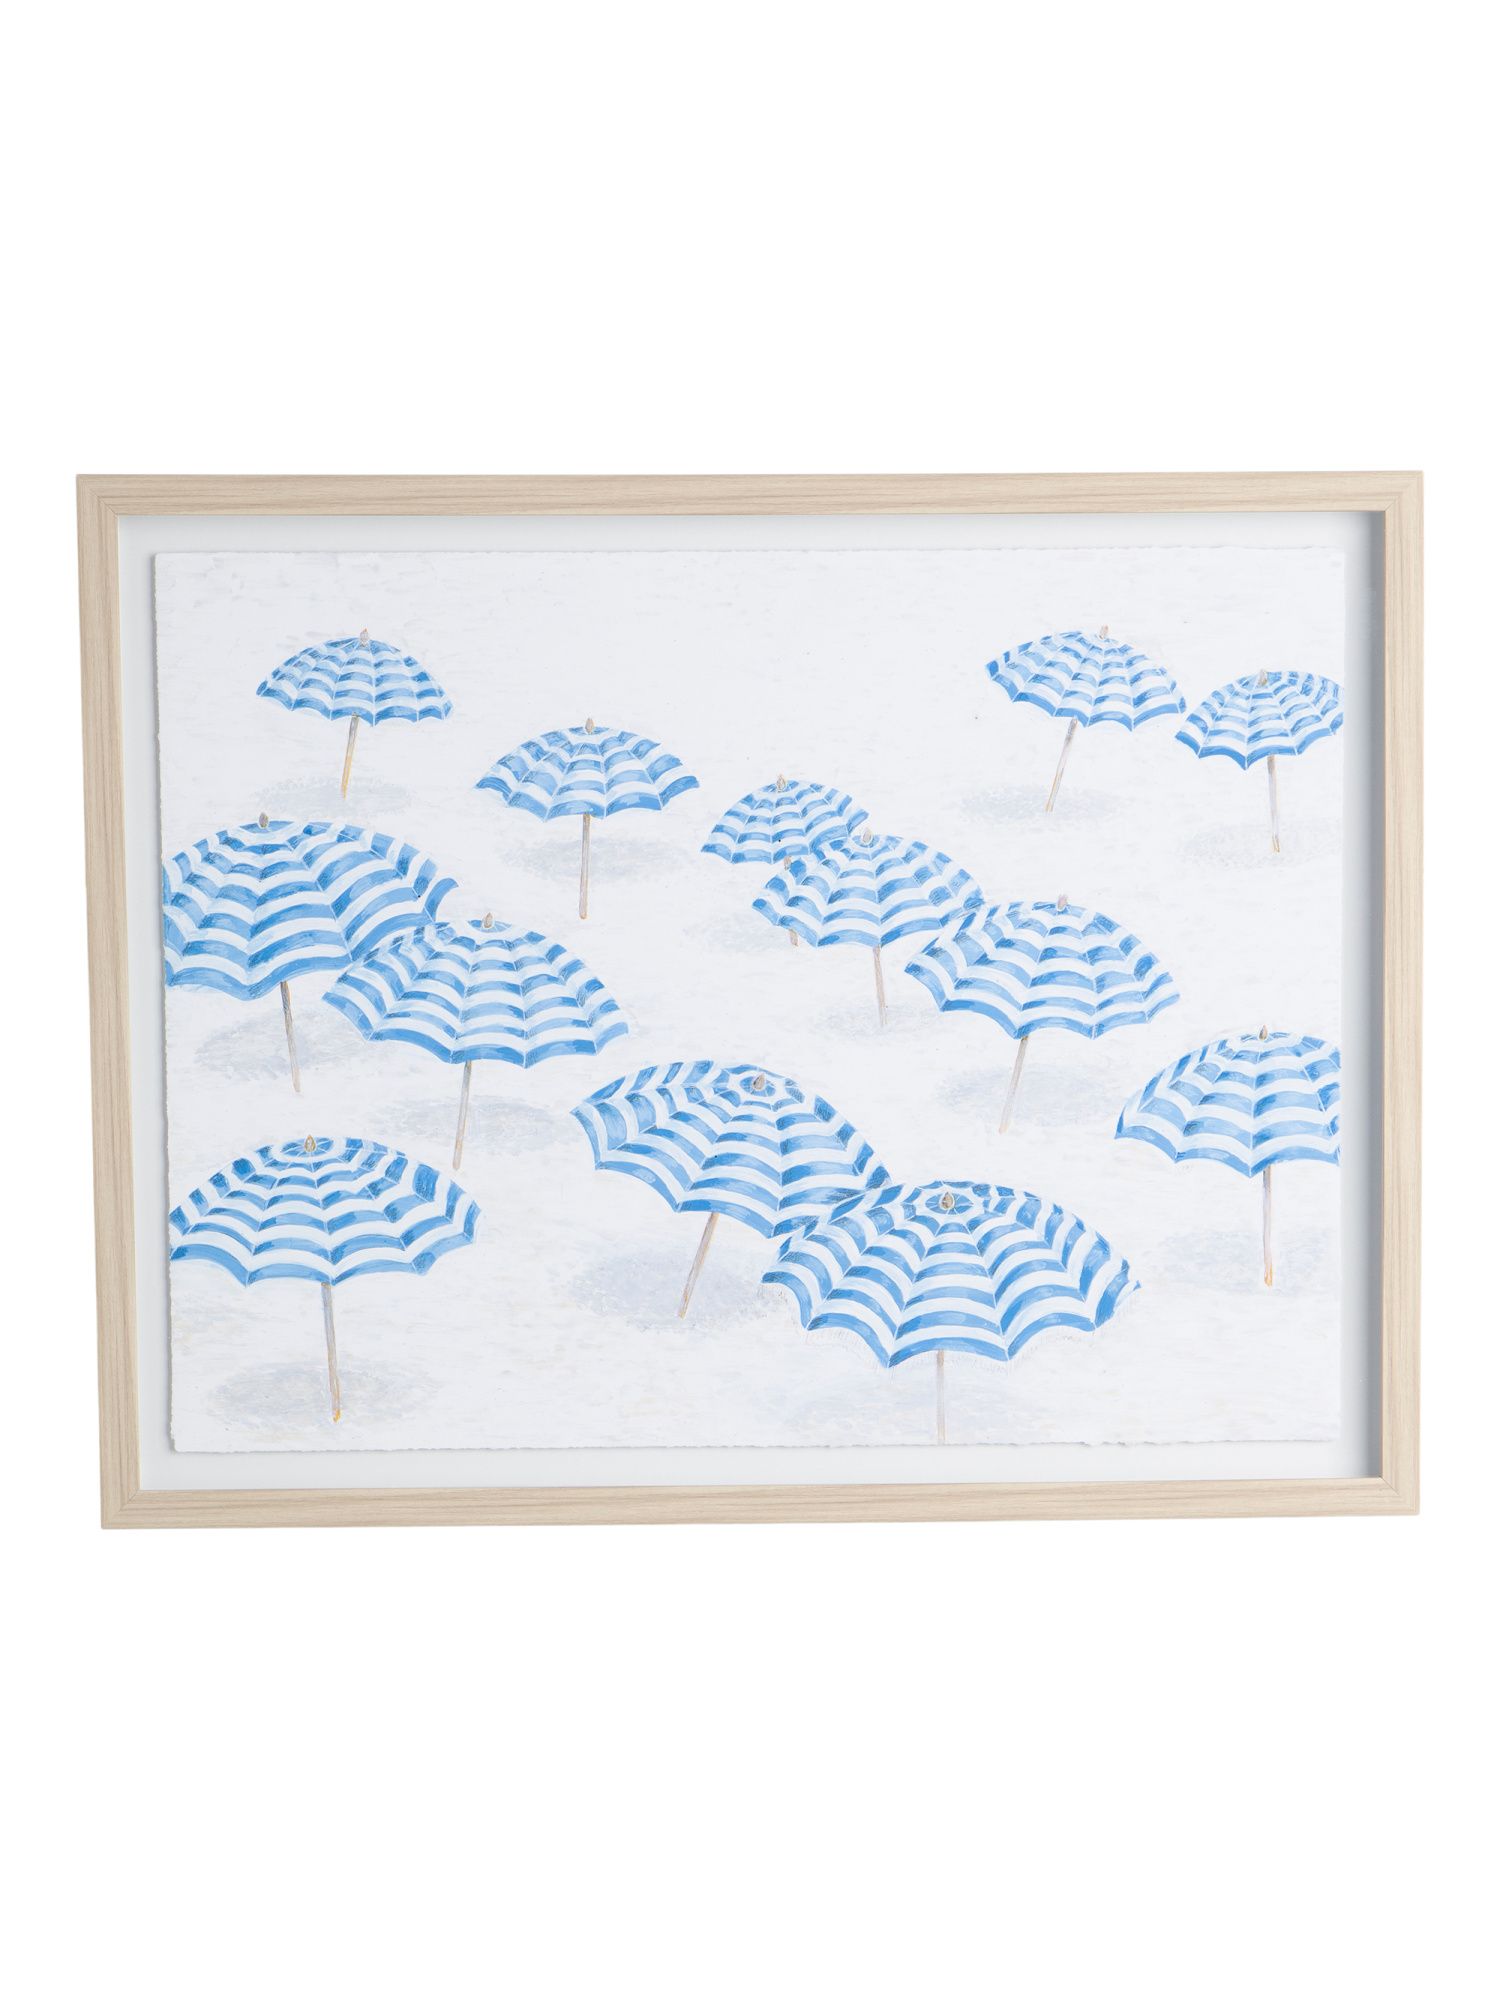 22x28 Blue And White Umbrellas Wall Art In Blonde Frame | TJ Maxx